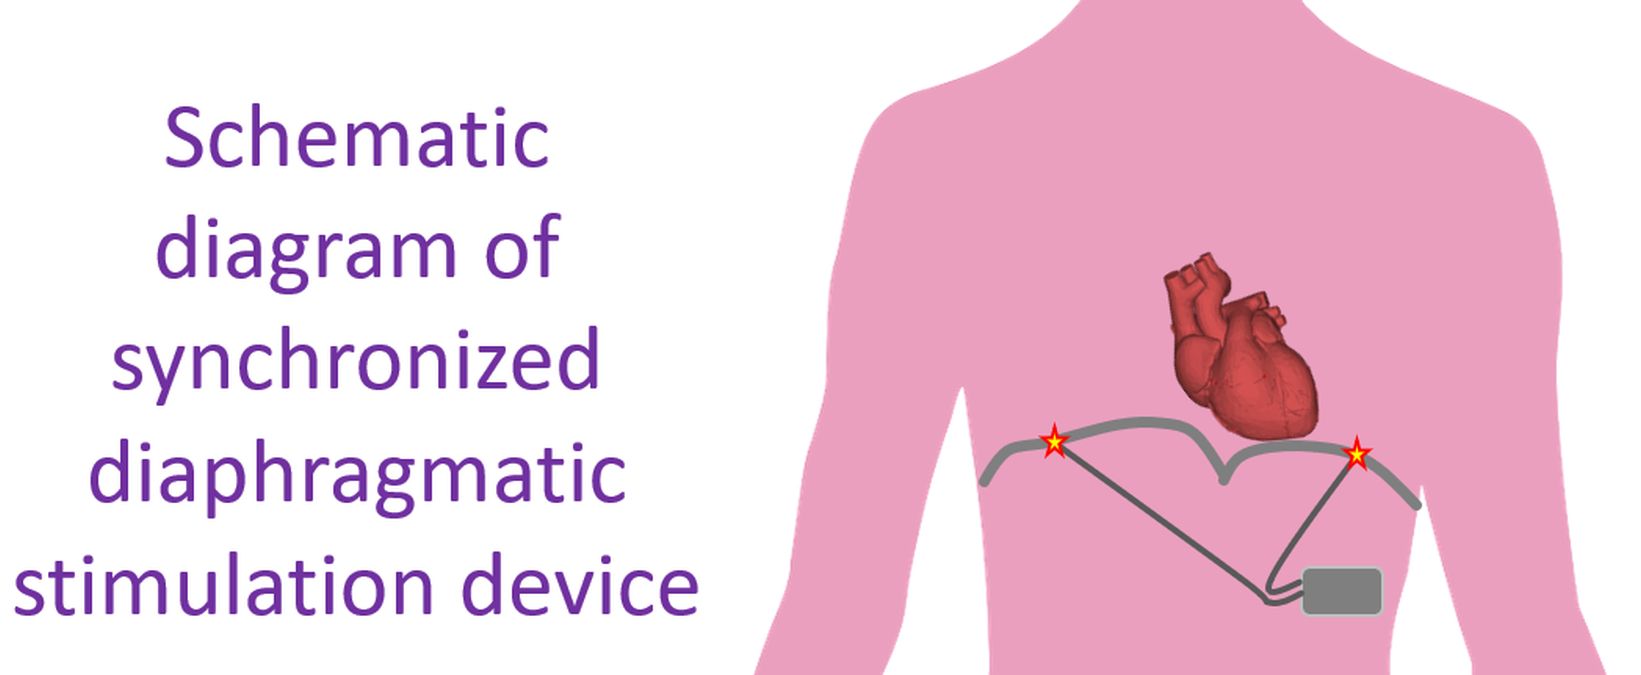 Schematic diagram of synchronized diaphragmatic stimulation device